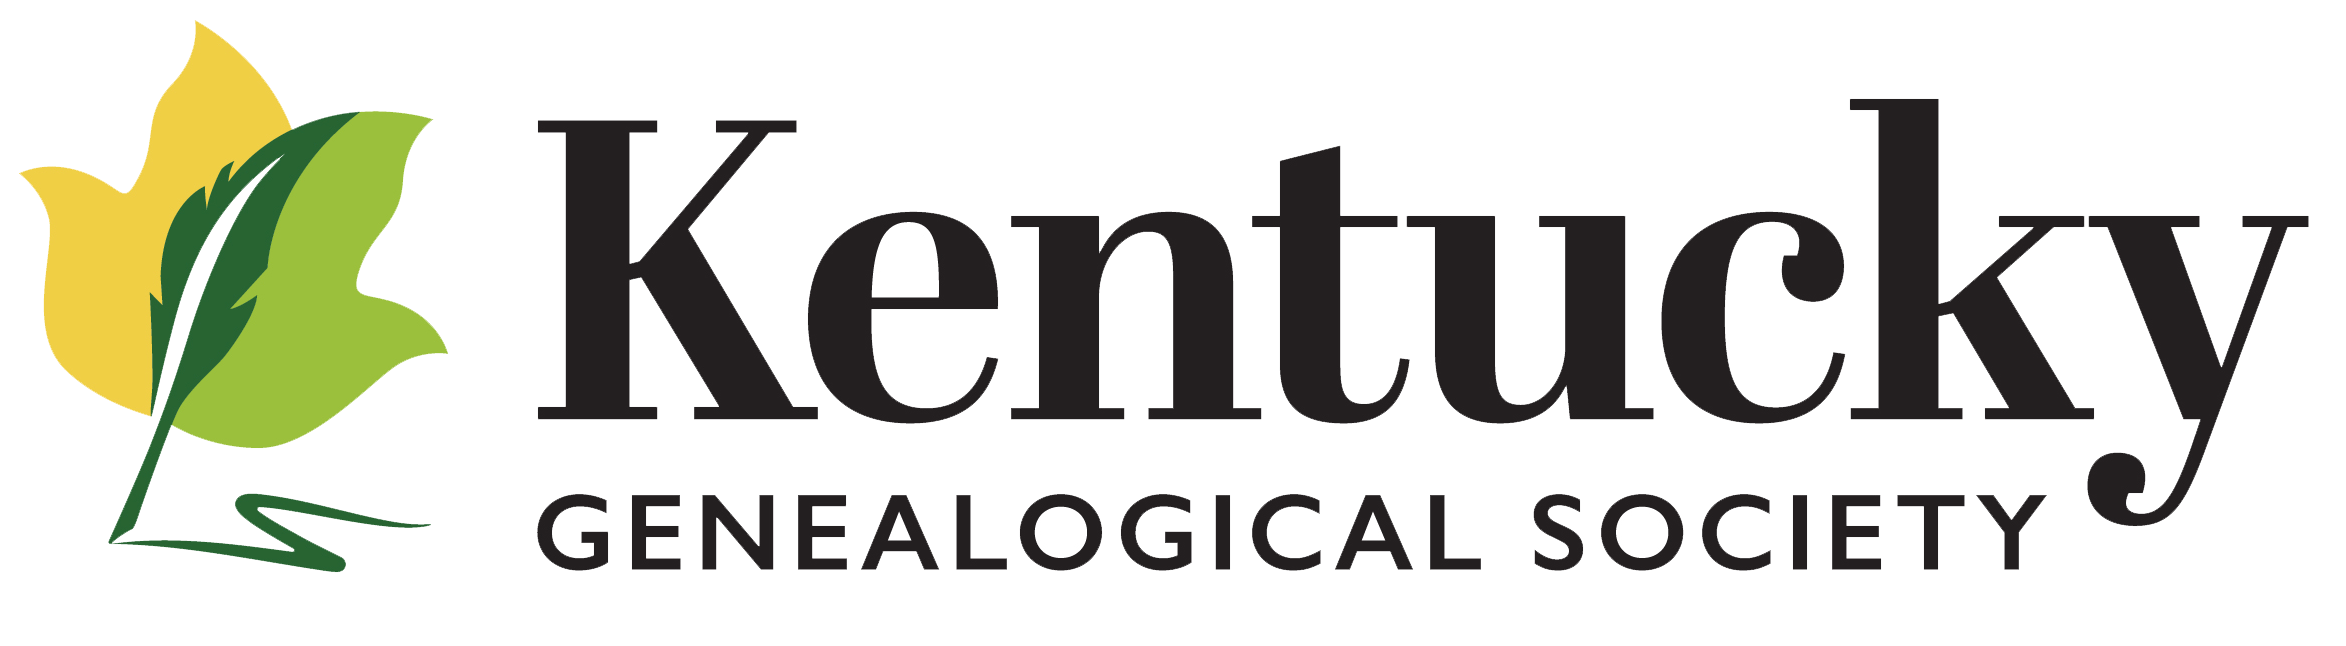 Kentucky_Genealogical_Society_Logo_Primary_RGB-01